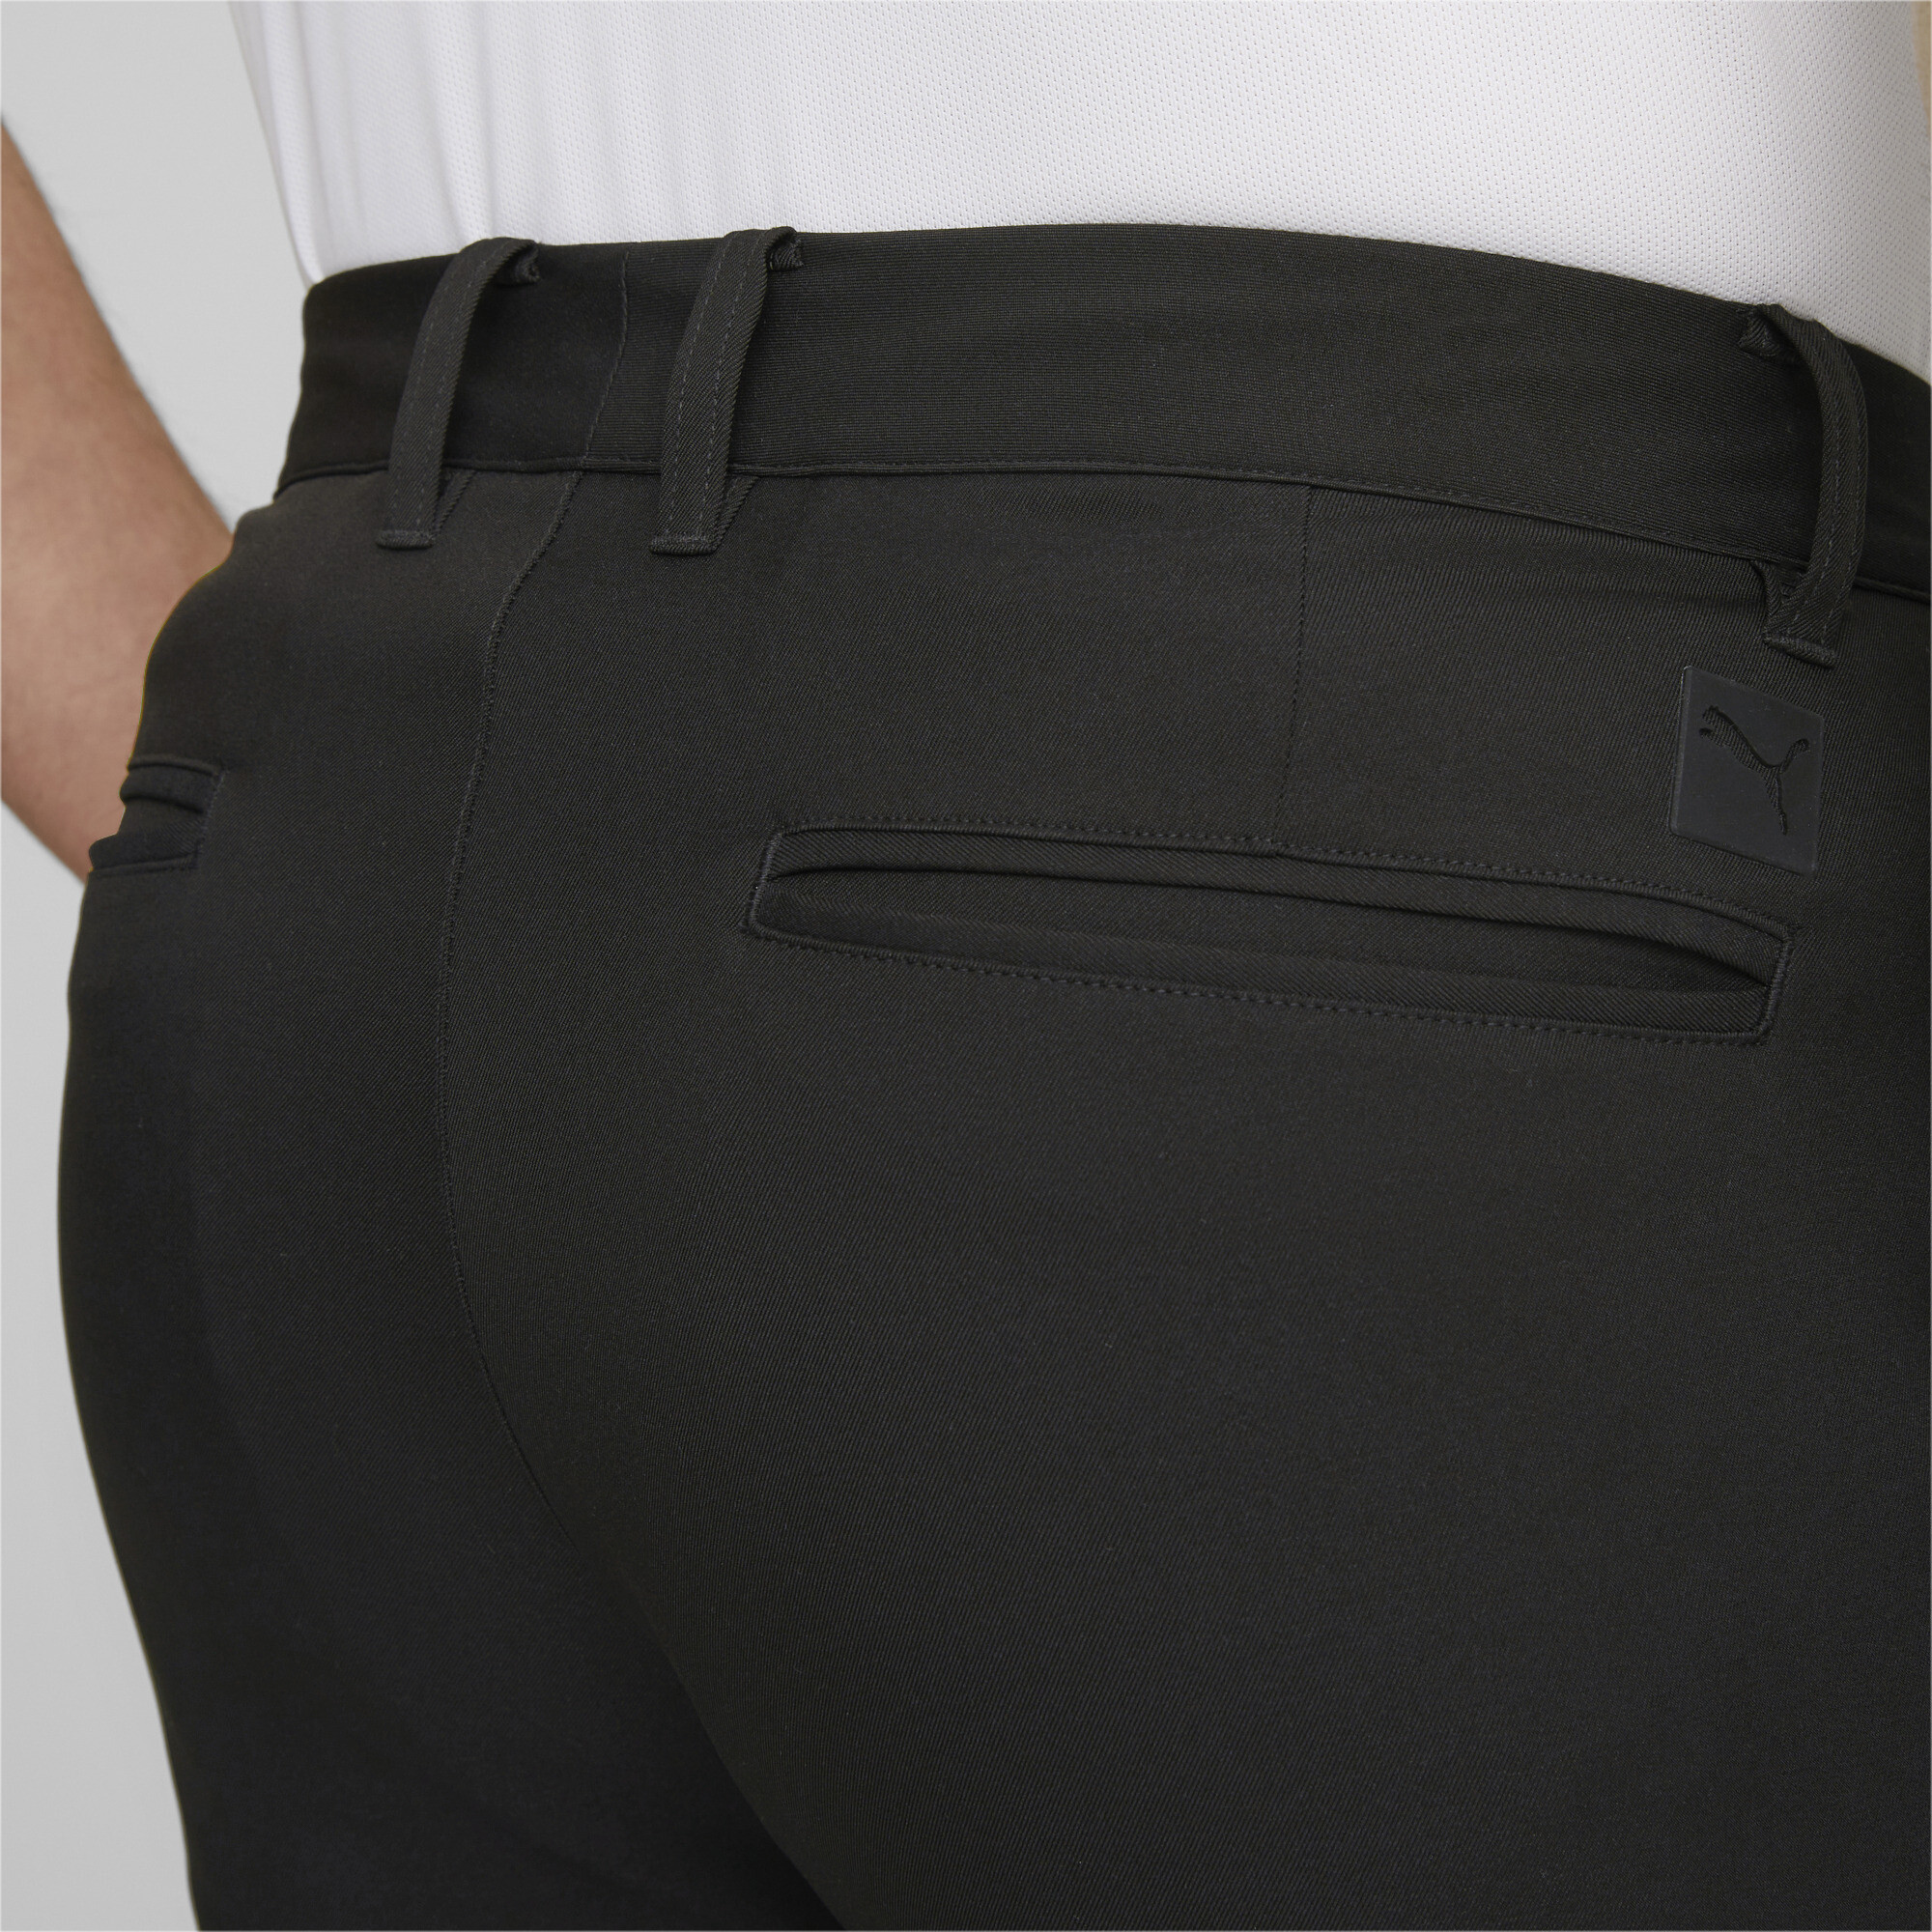 Men's Puma Dealer Golf Pants, Black, Size 40/32, Clothing